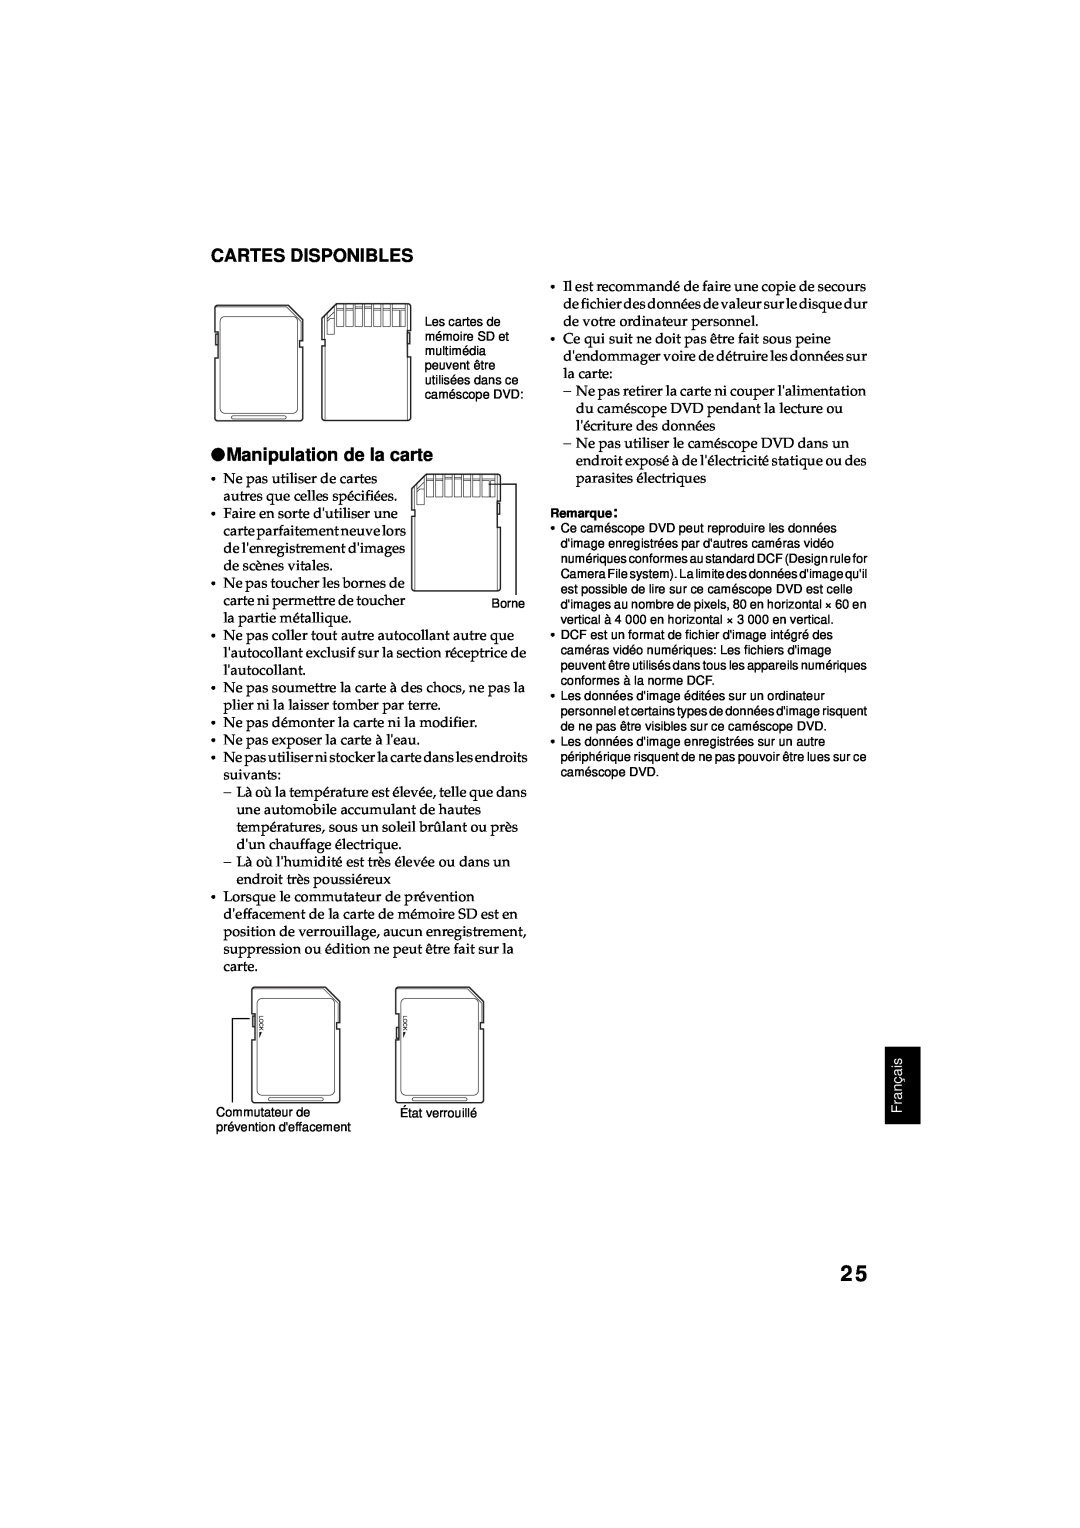 Hitachi DZ-MV380A manual Cartes Disponibles, Manipulation de la carte, Français 